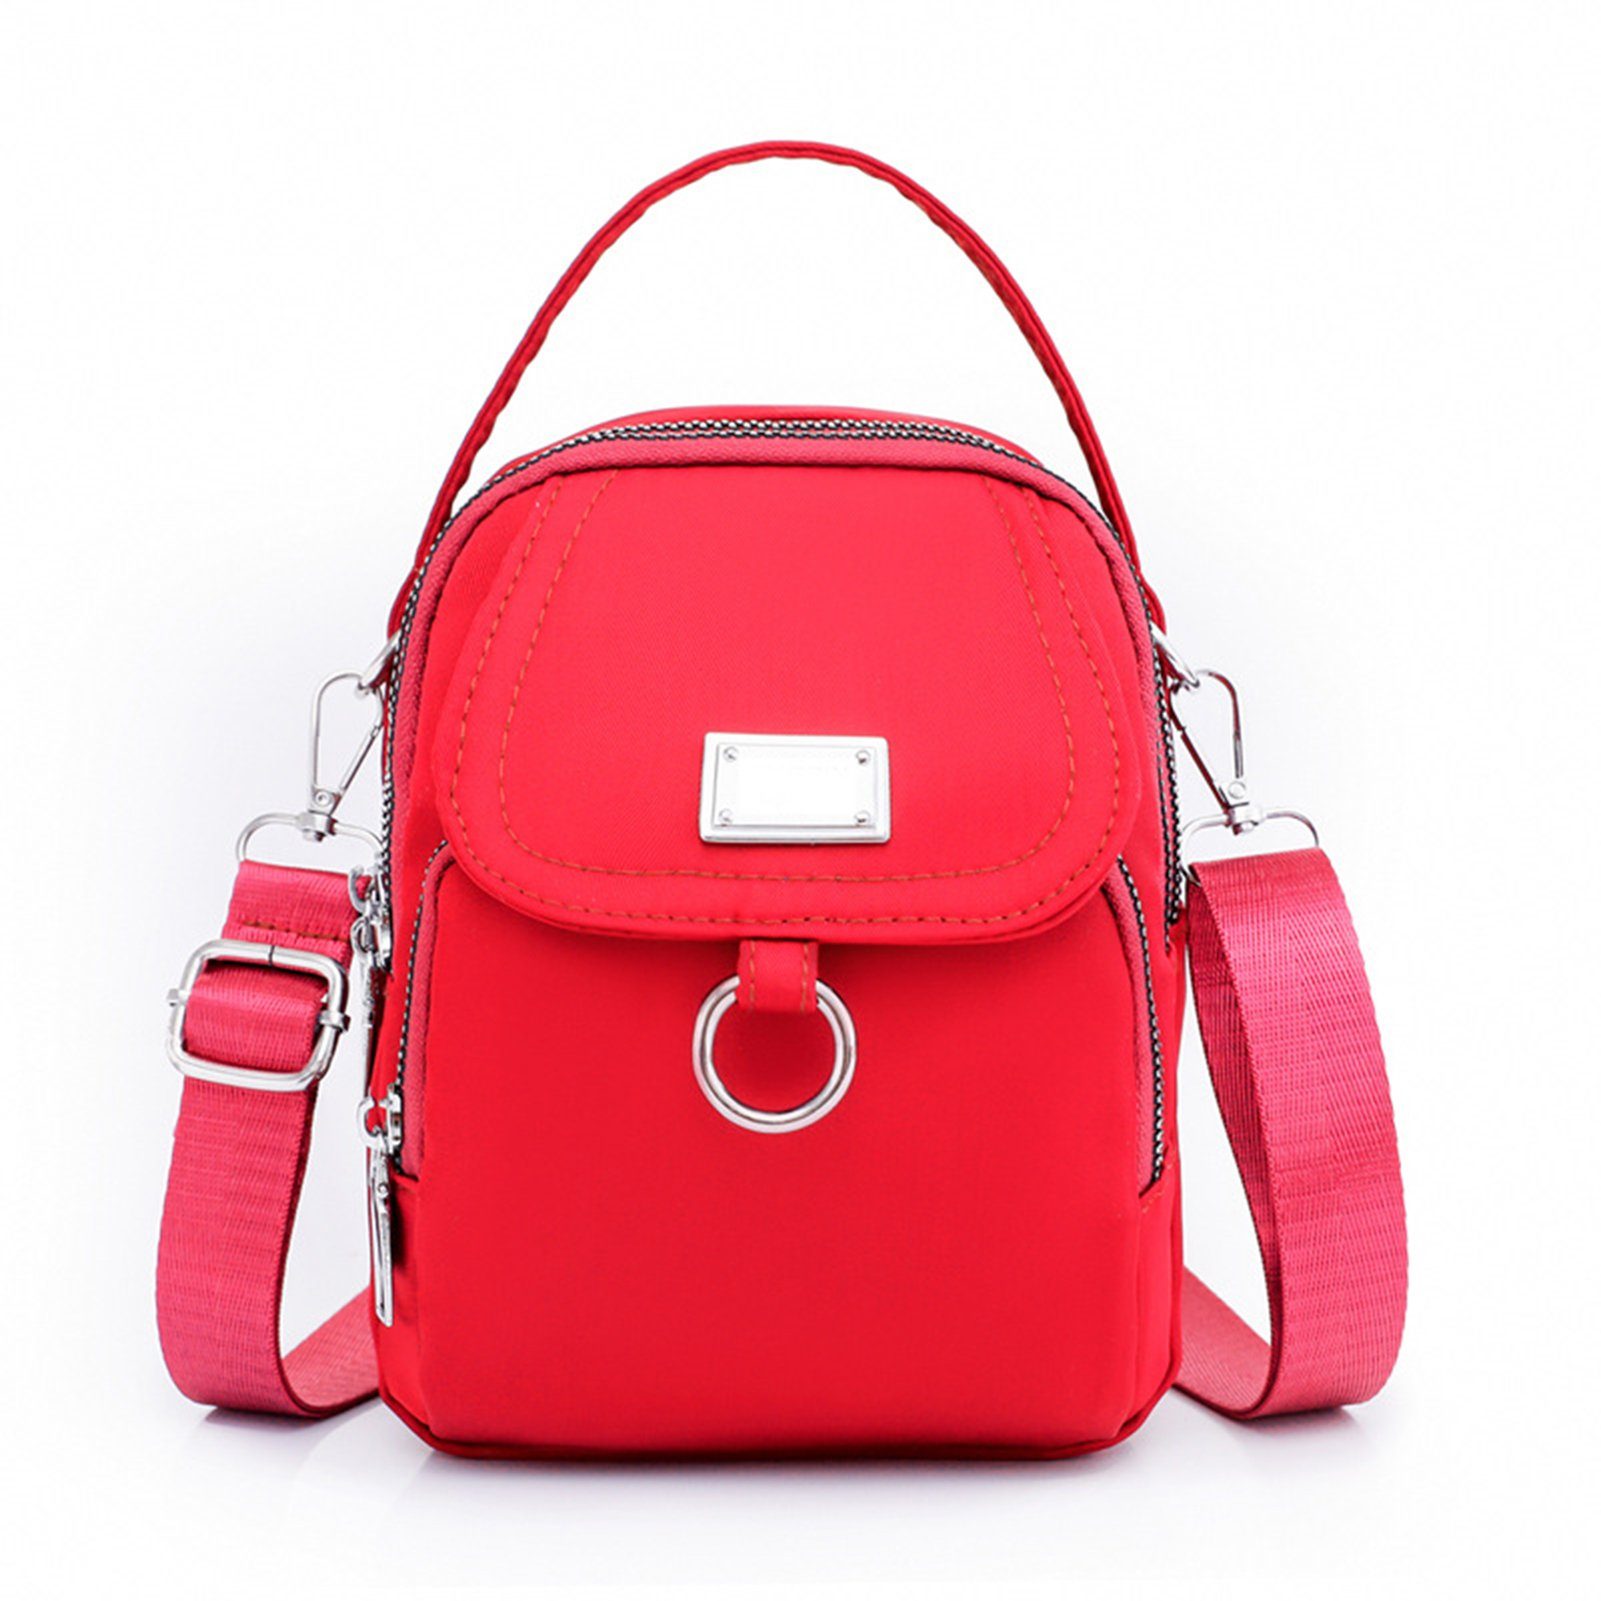 Crossbody Damen-Umhängetasche, Reißverschluss-Schultertasche, Umhängetasche Bag Blusmart red